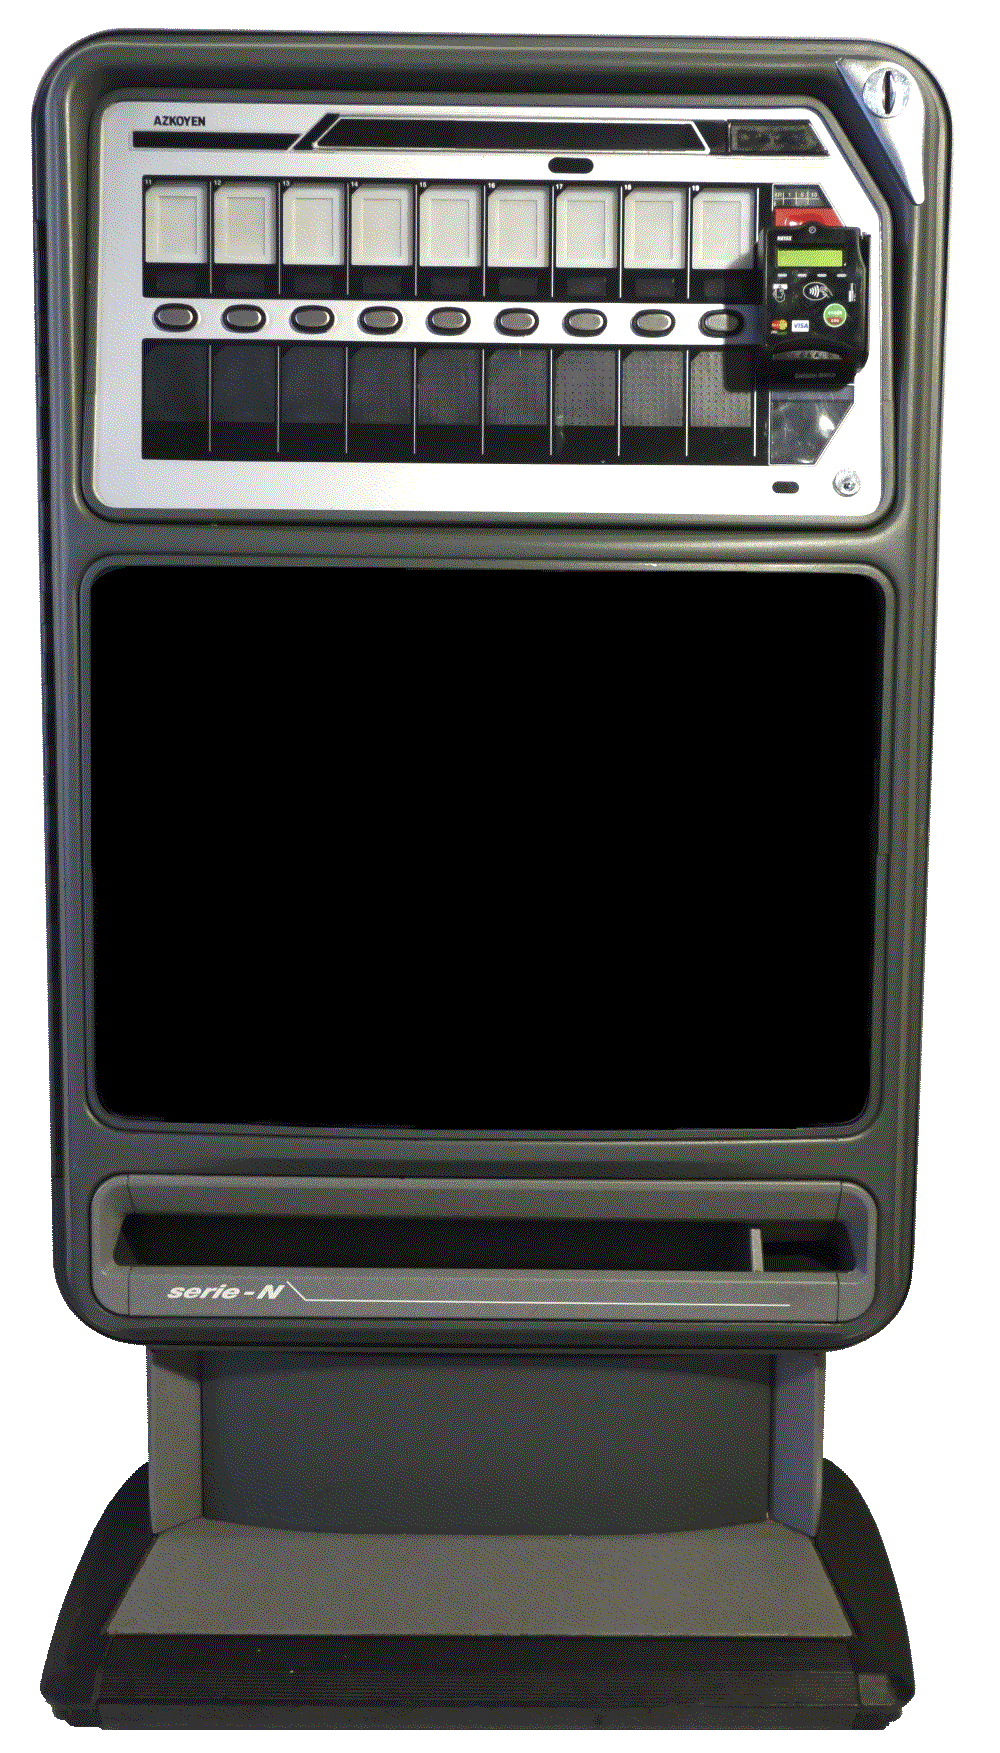 N-Serie (cigarettautomat)